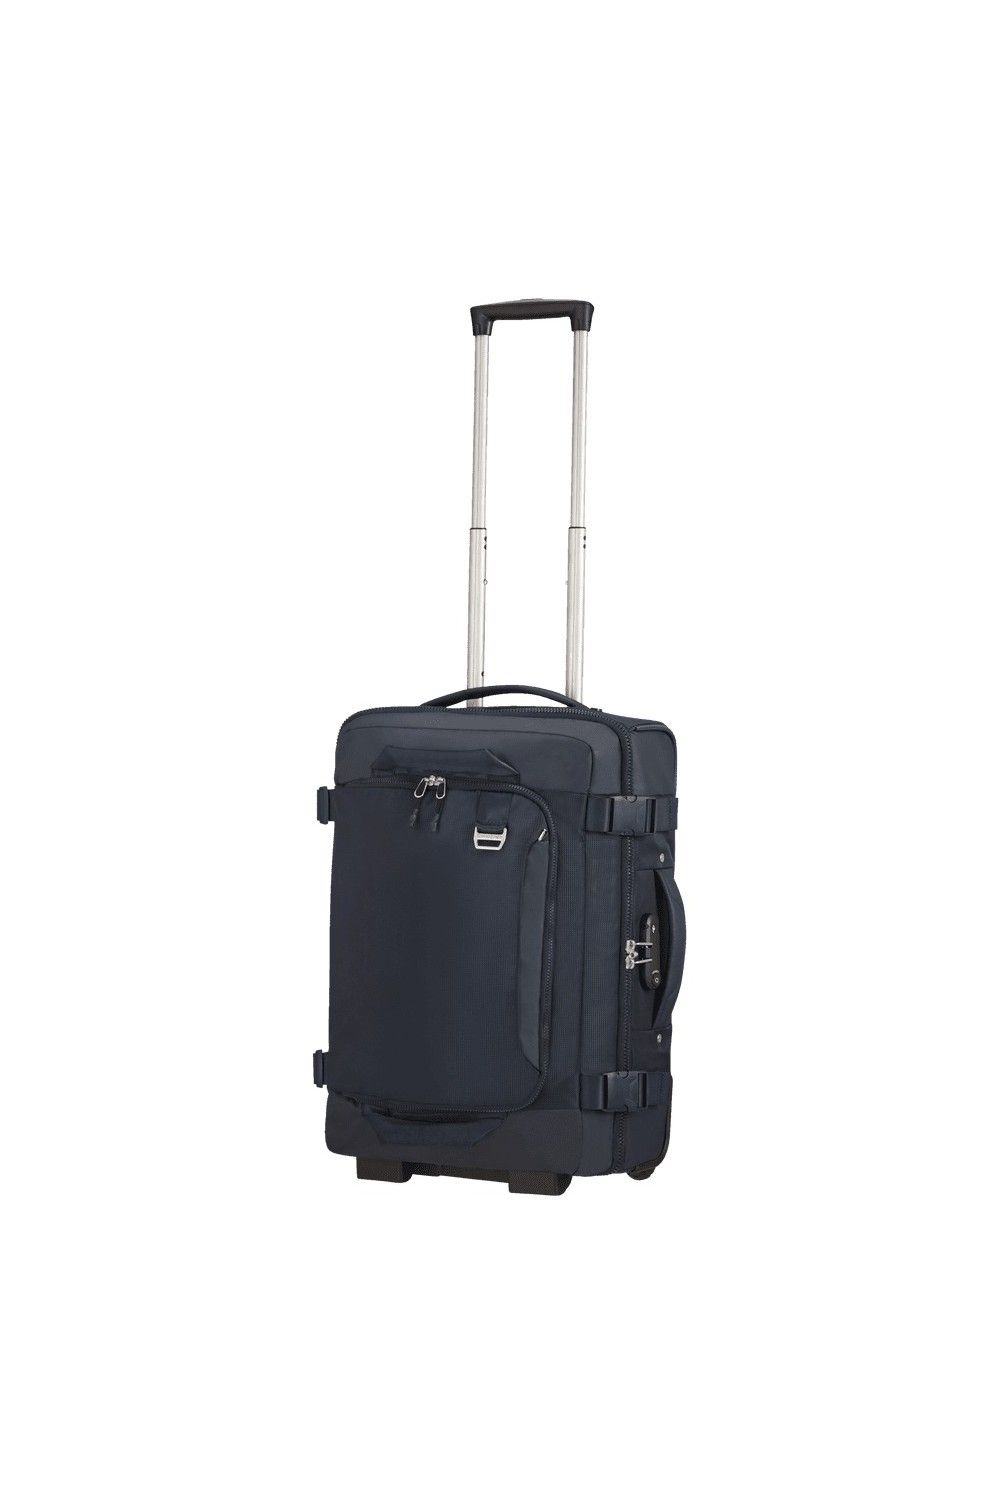 Samsonite Midtown 55cm Travel Bag sac à dos à roulettes